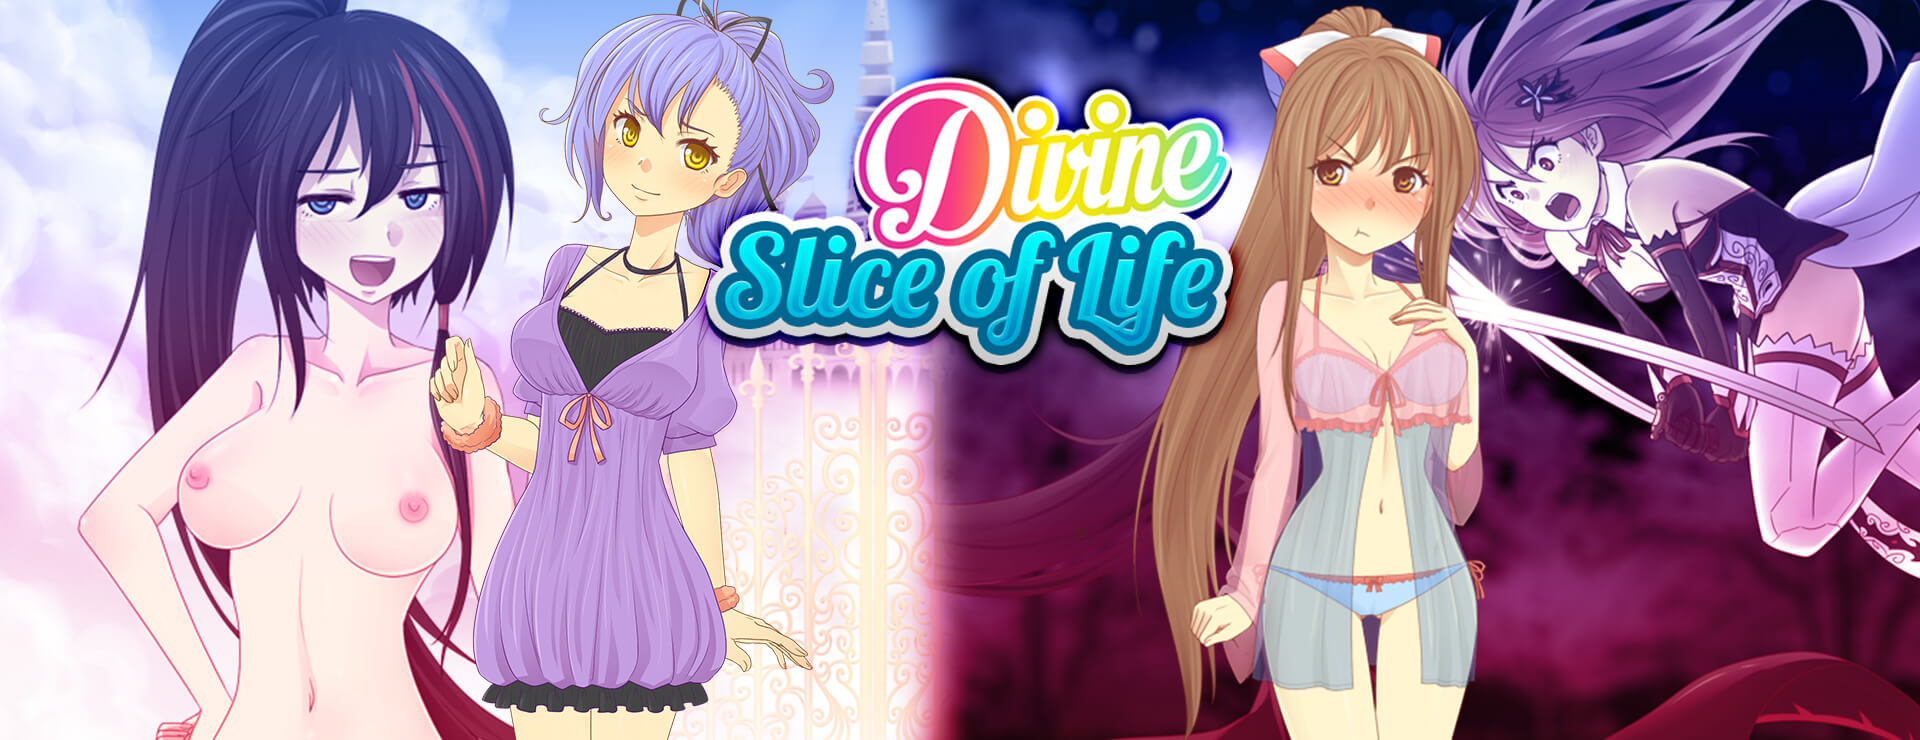 Divine Slice of Life - Japanisches Adventure Spiel